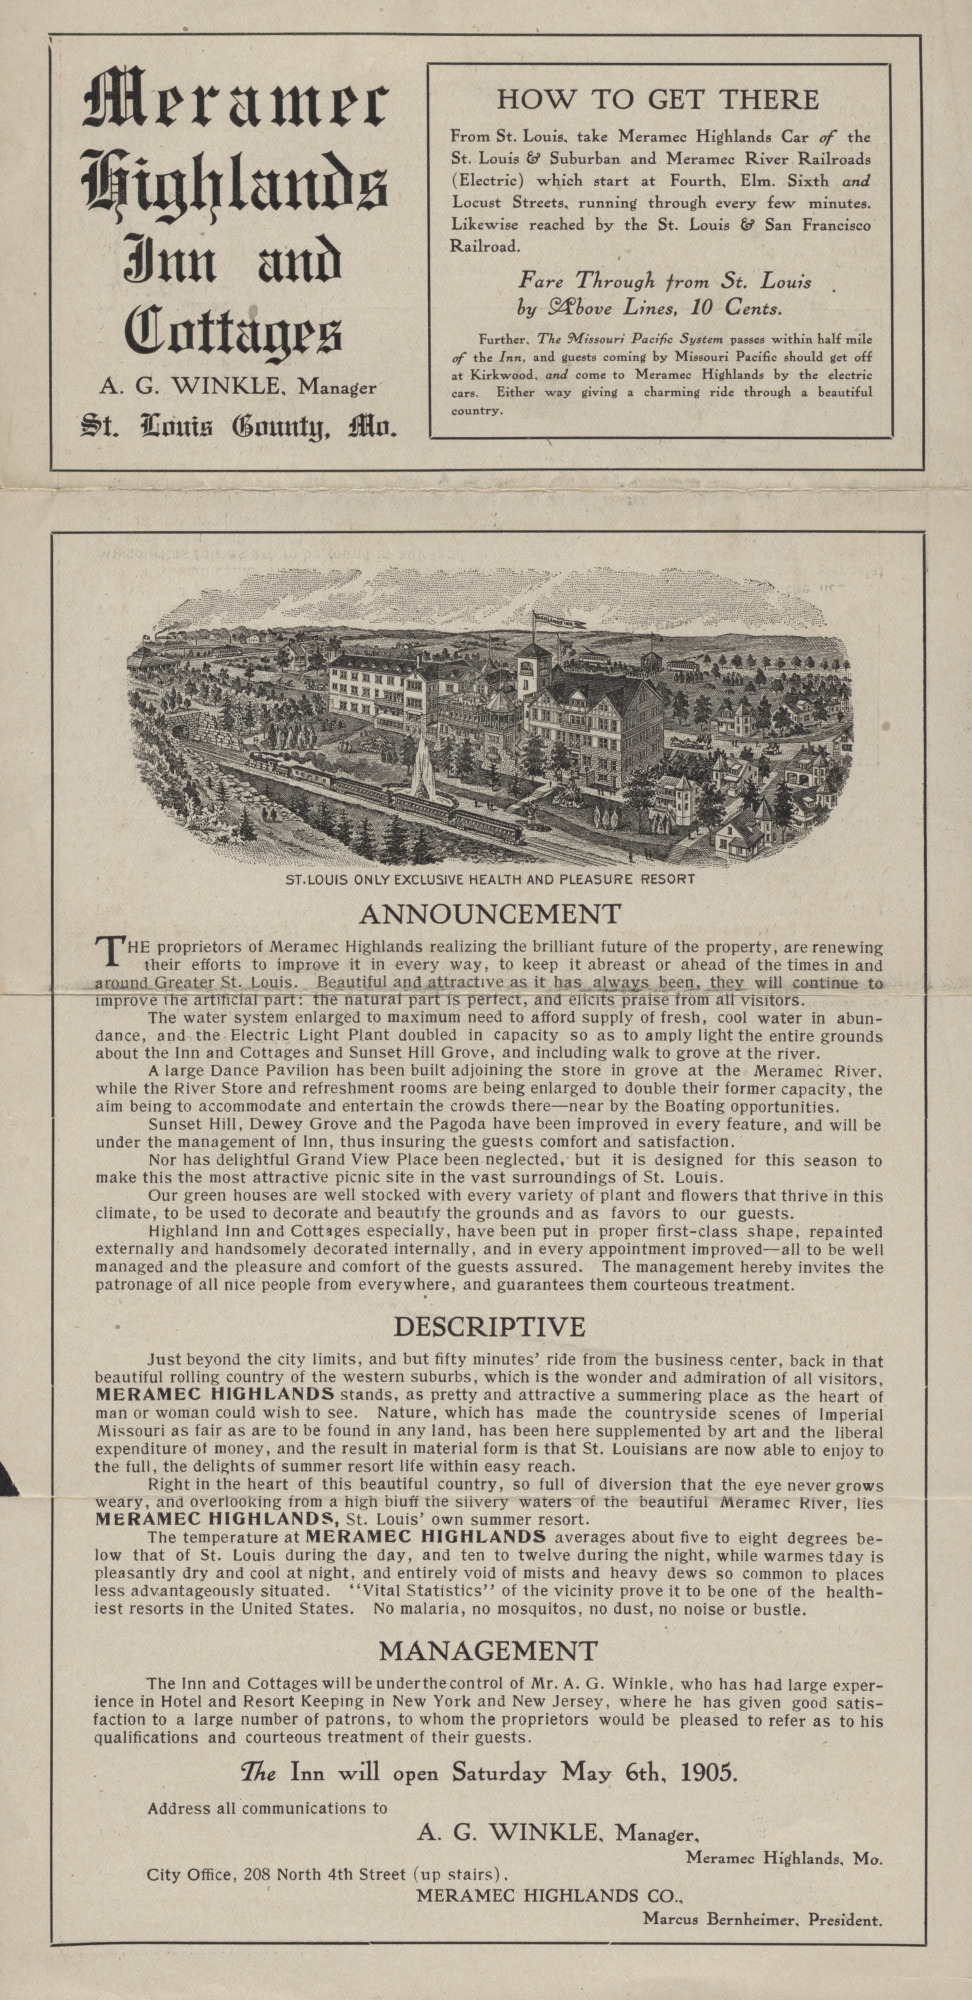 1905 advert for Meramec Highlands